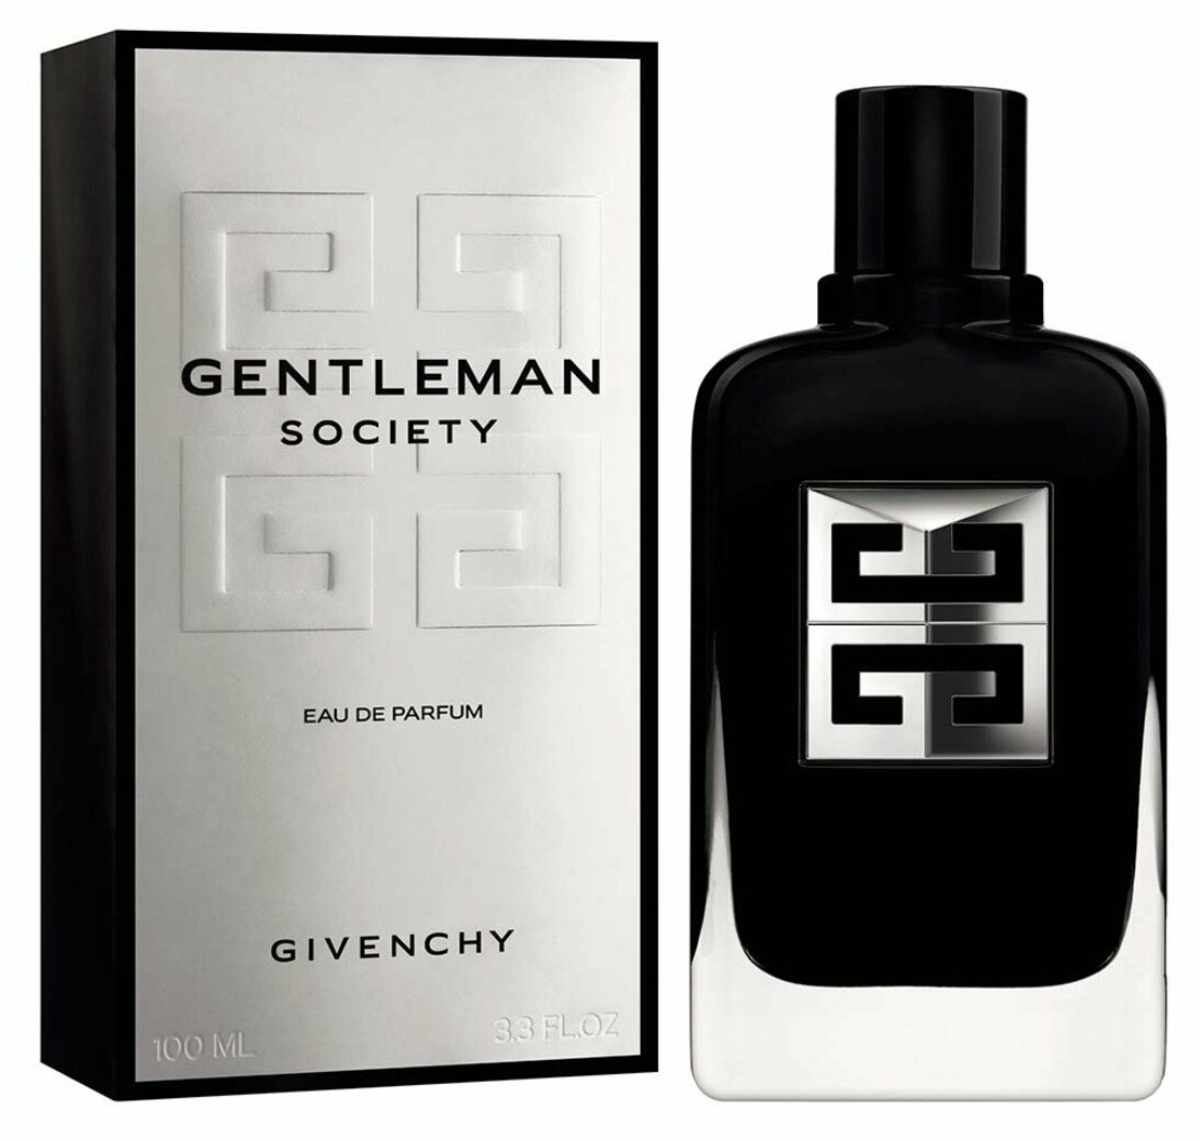 Gentleman Givenchy Society